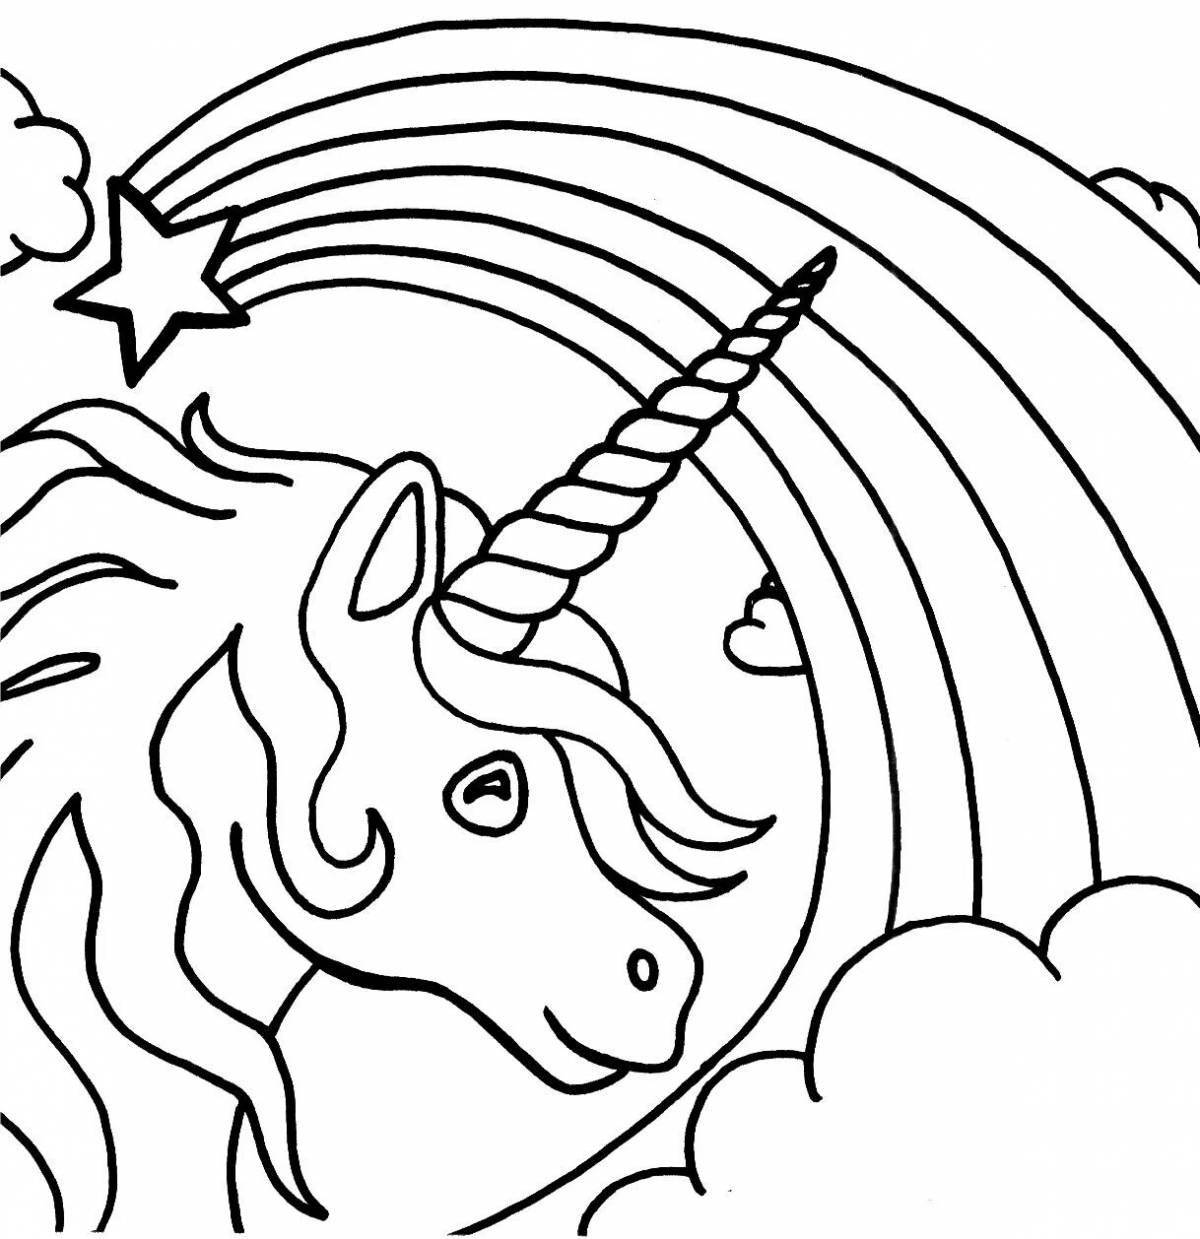 Coloring majestic unicorn